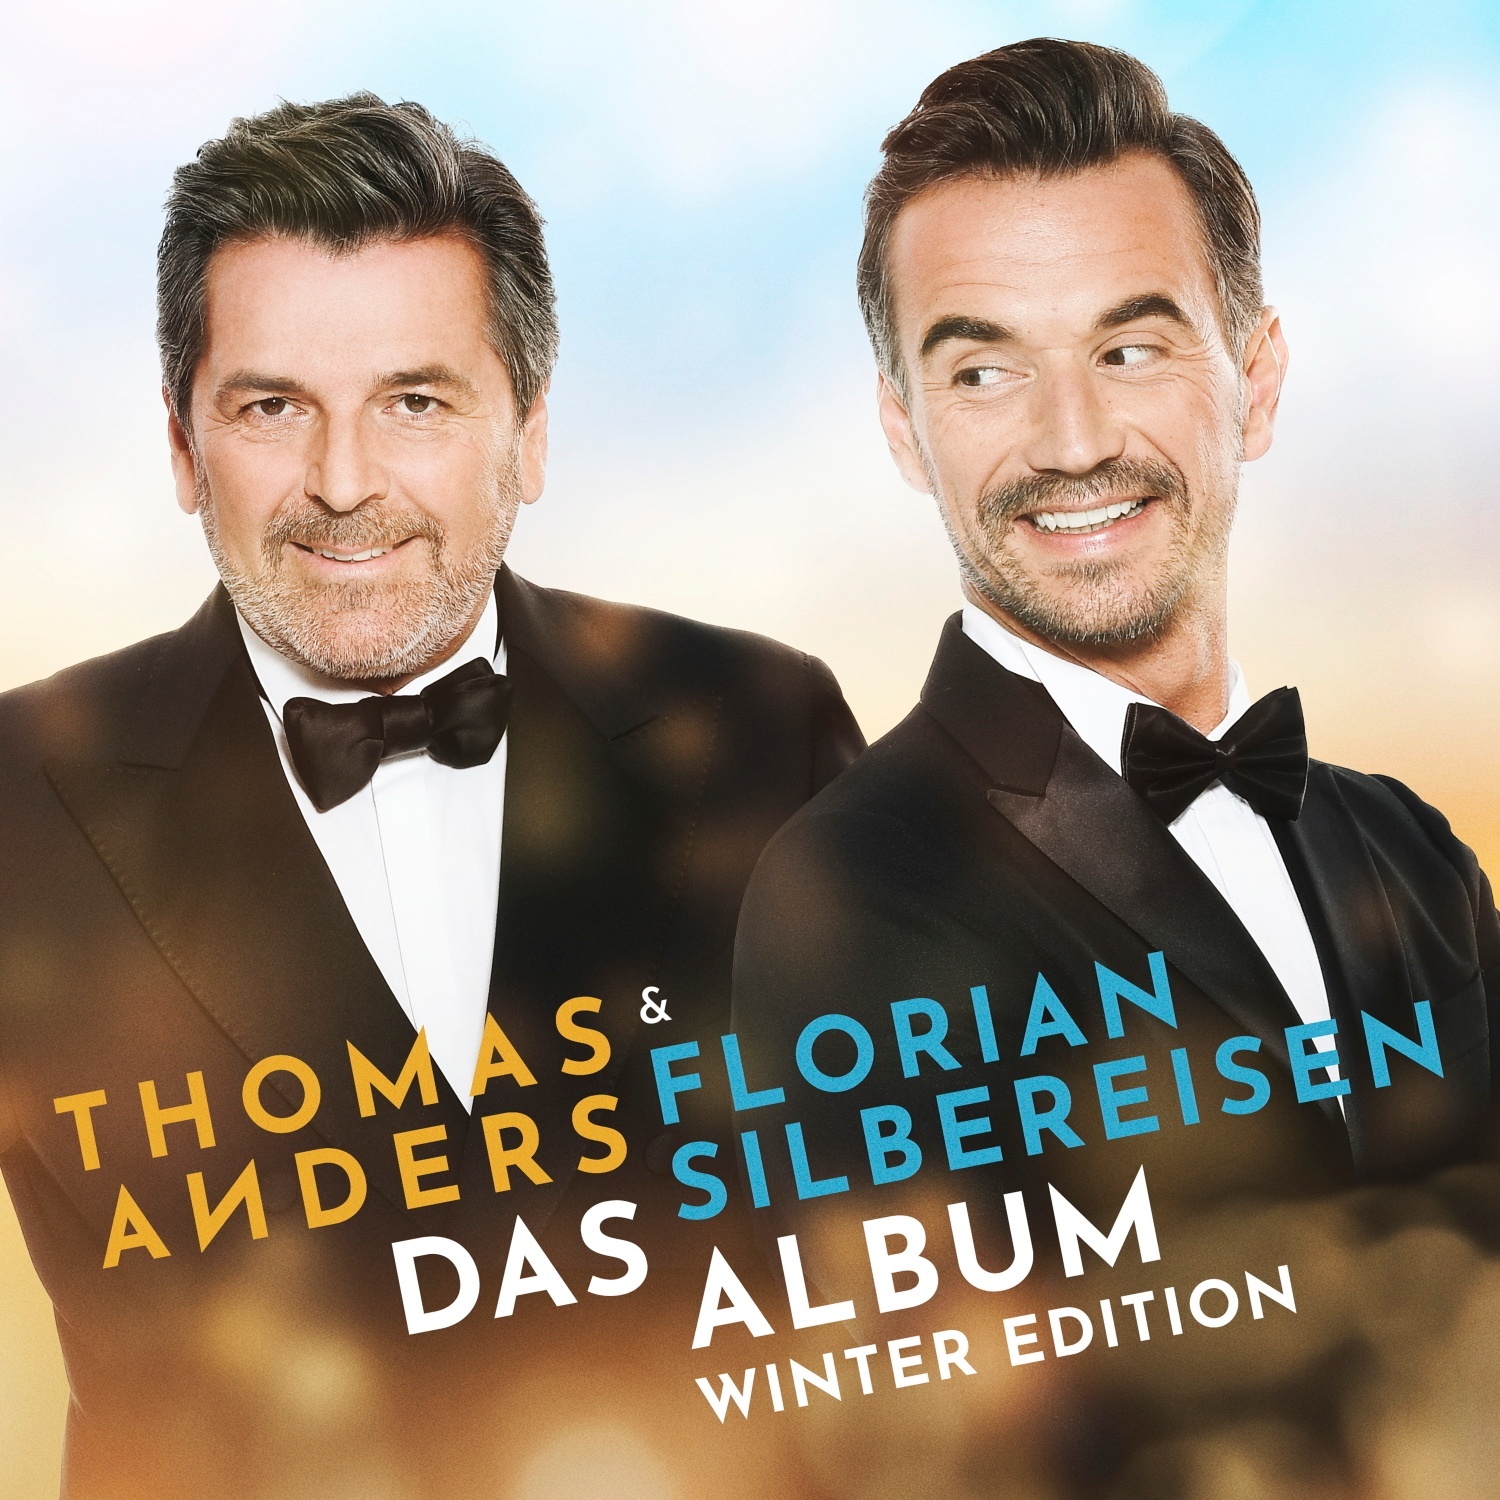 Das Album - Winter Edition (2 CDs) - Thomas Anders & Silbereisen Florian. (CD)